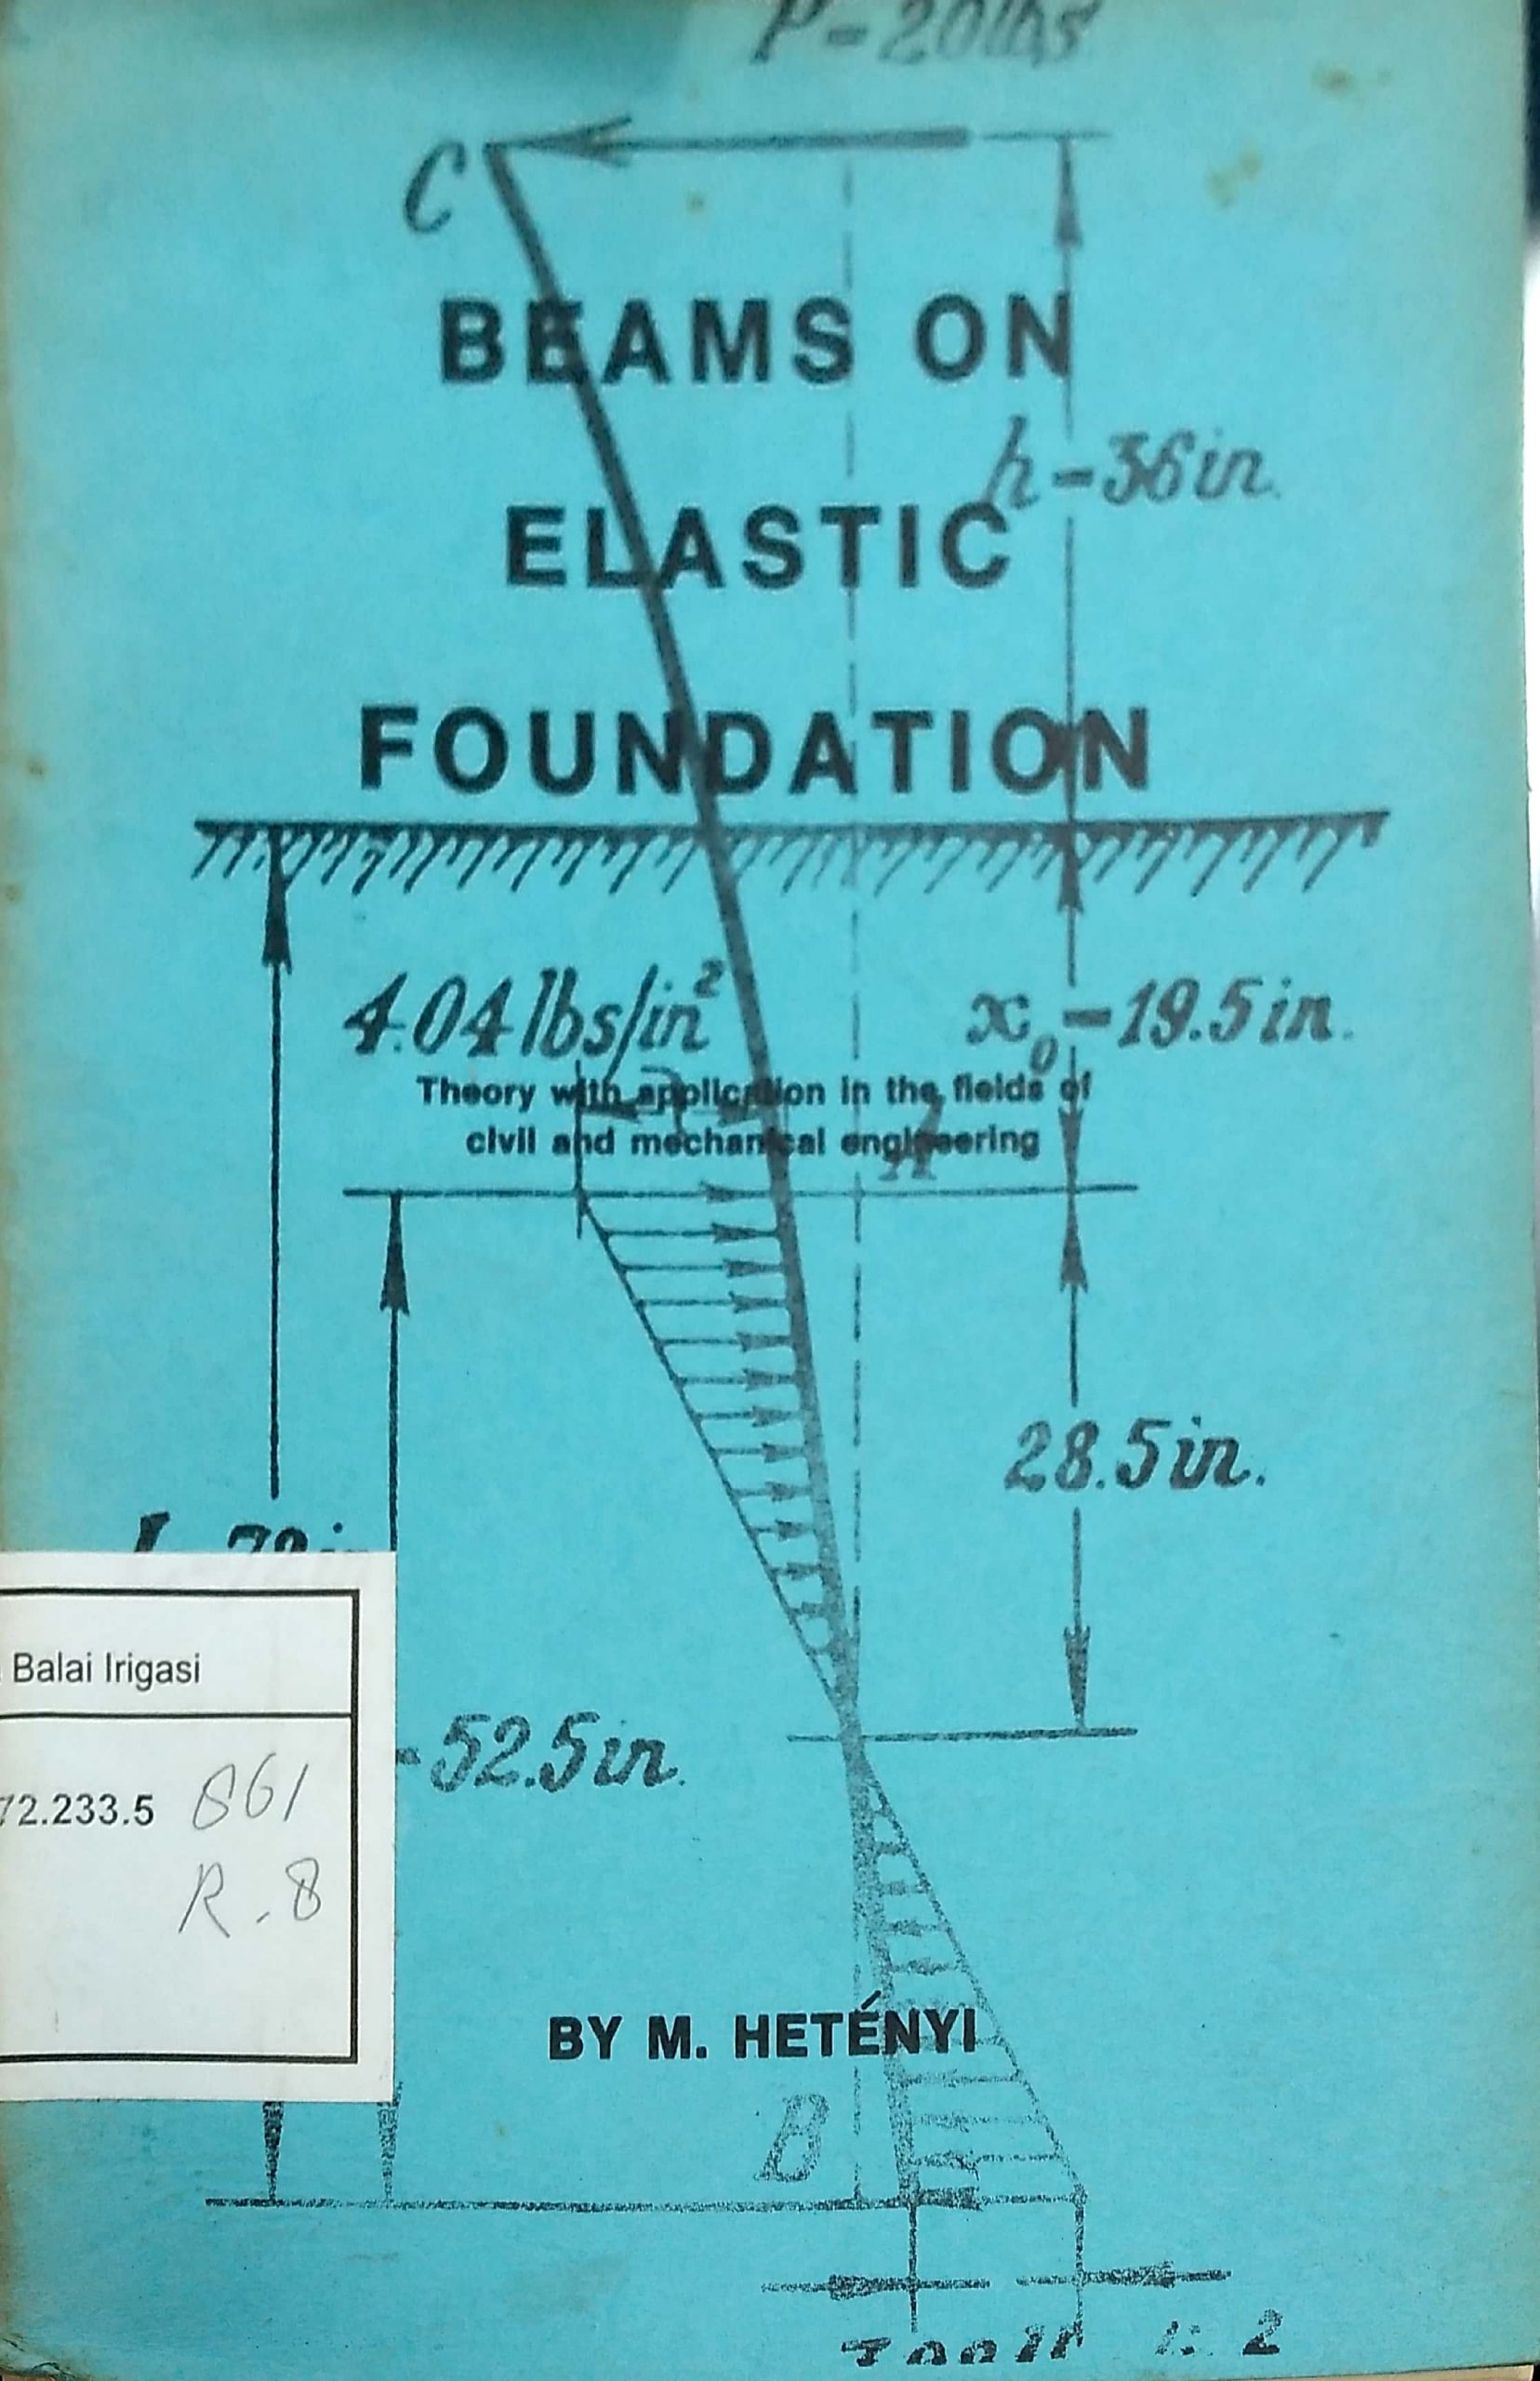 Beams on Elastic Foundation